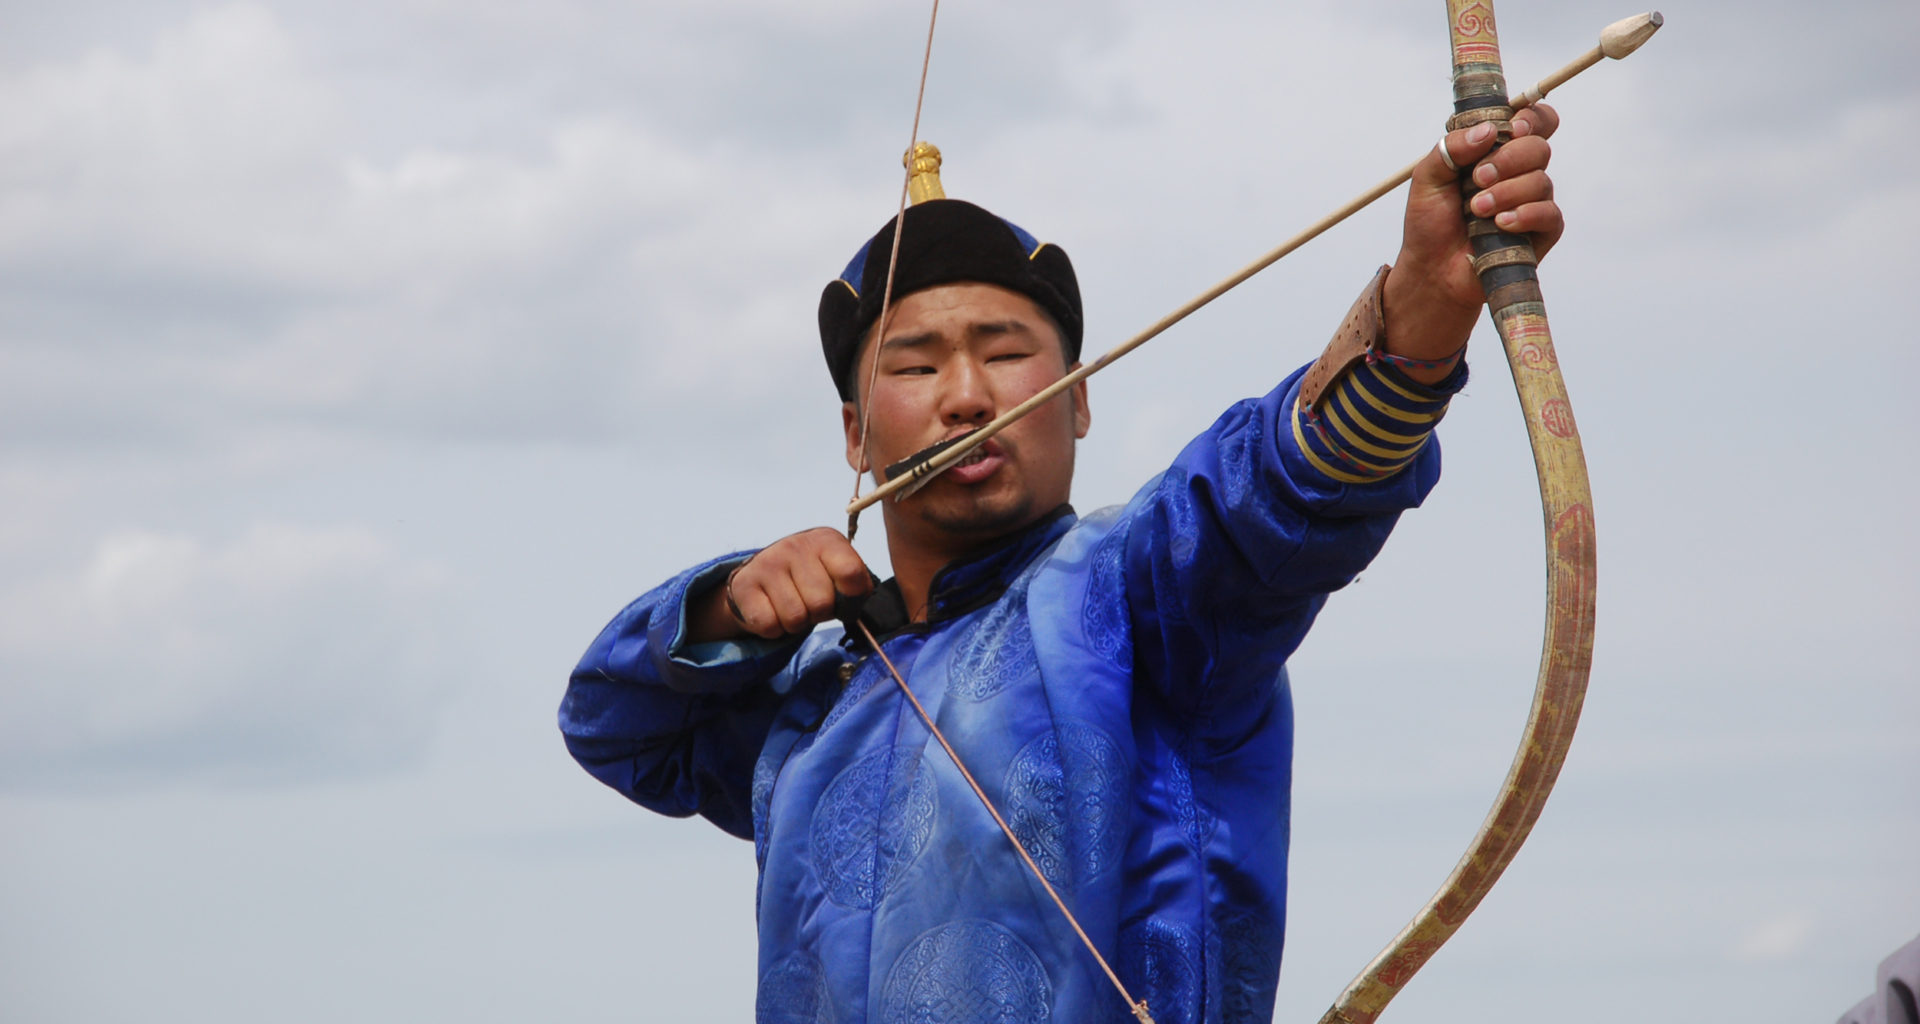 mongol arrows